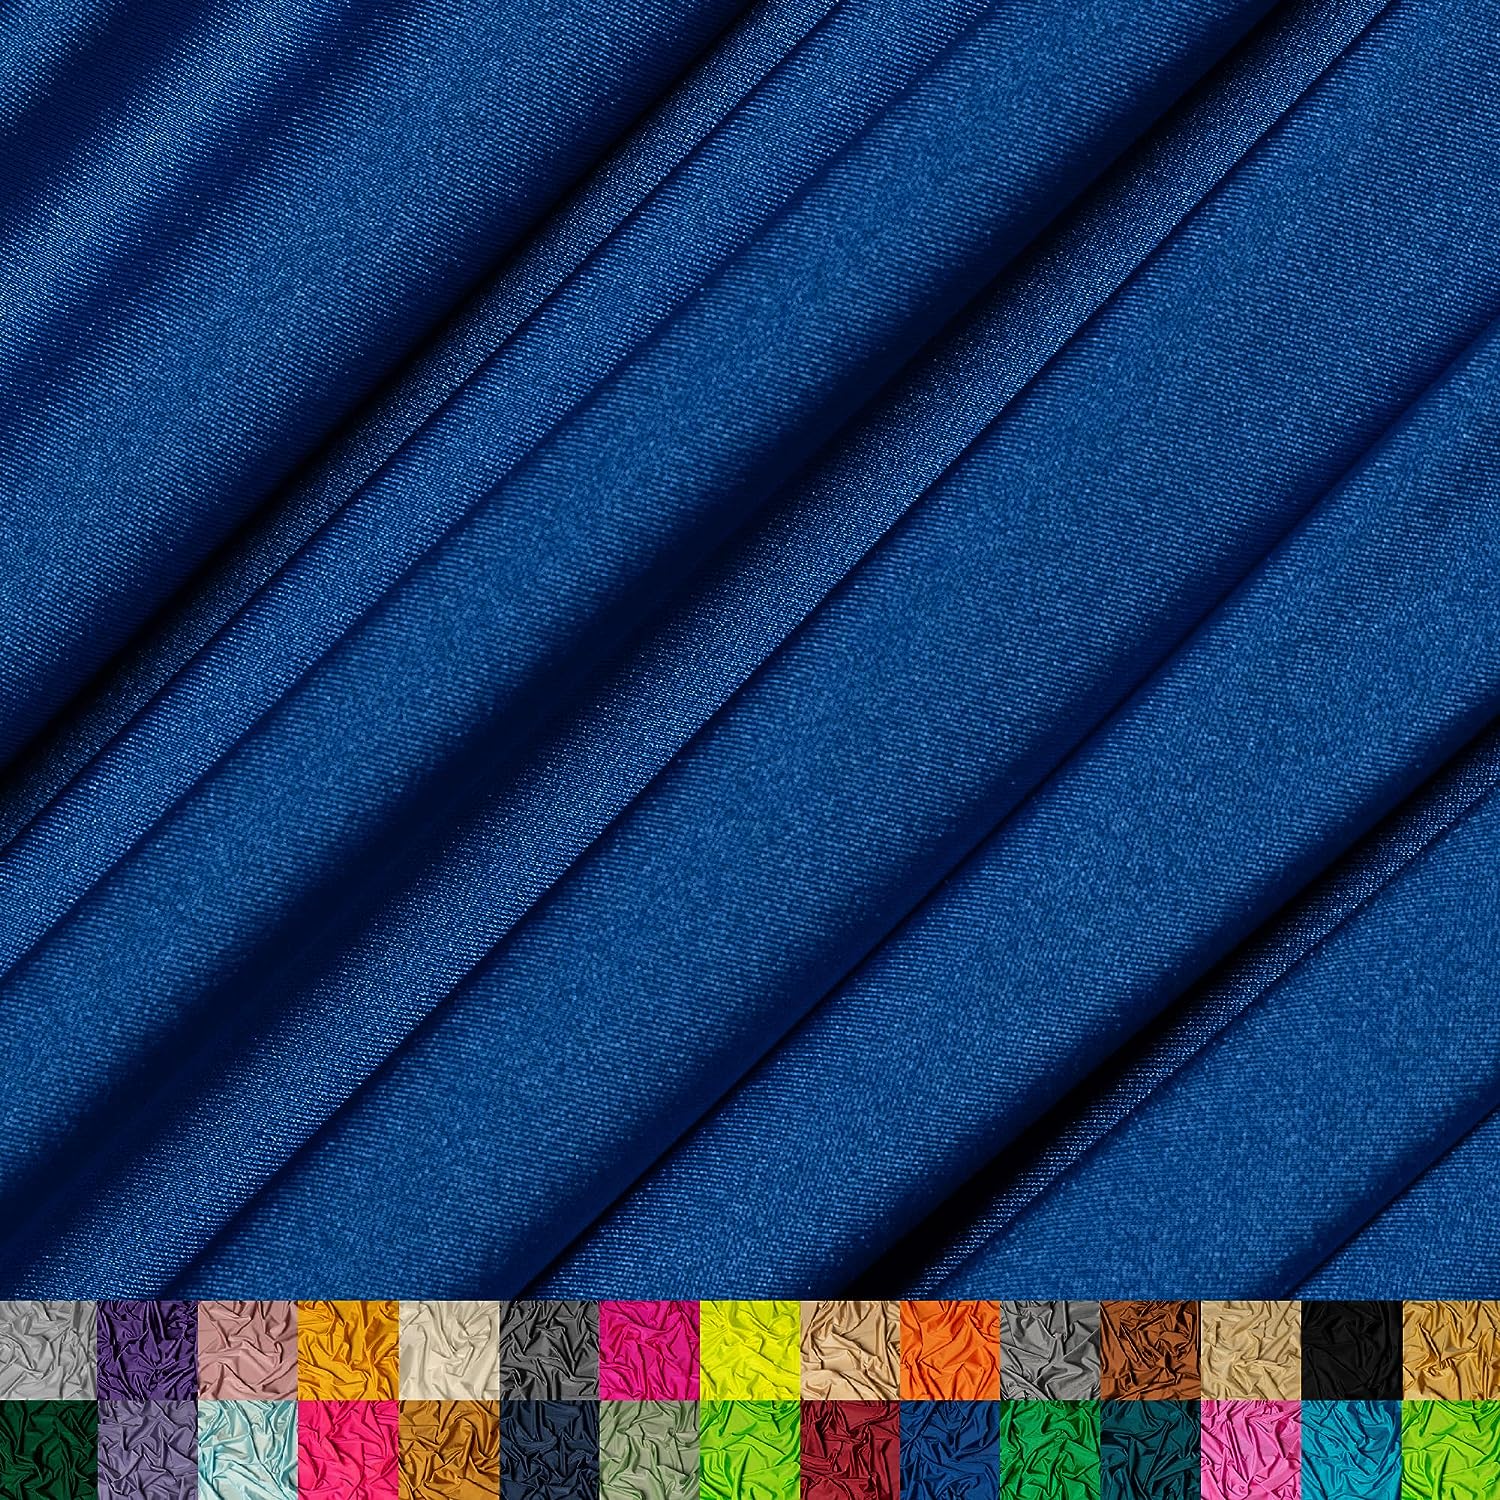 Royal Blue Luxury Nylon Spandex Fabric By The YardICE FABRICSICE FABRICSBy The Yard (58" Width)Royal Blue Luxury Nylon Spandex Fabric By The Yard ICE FABRICS